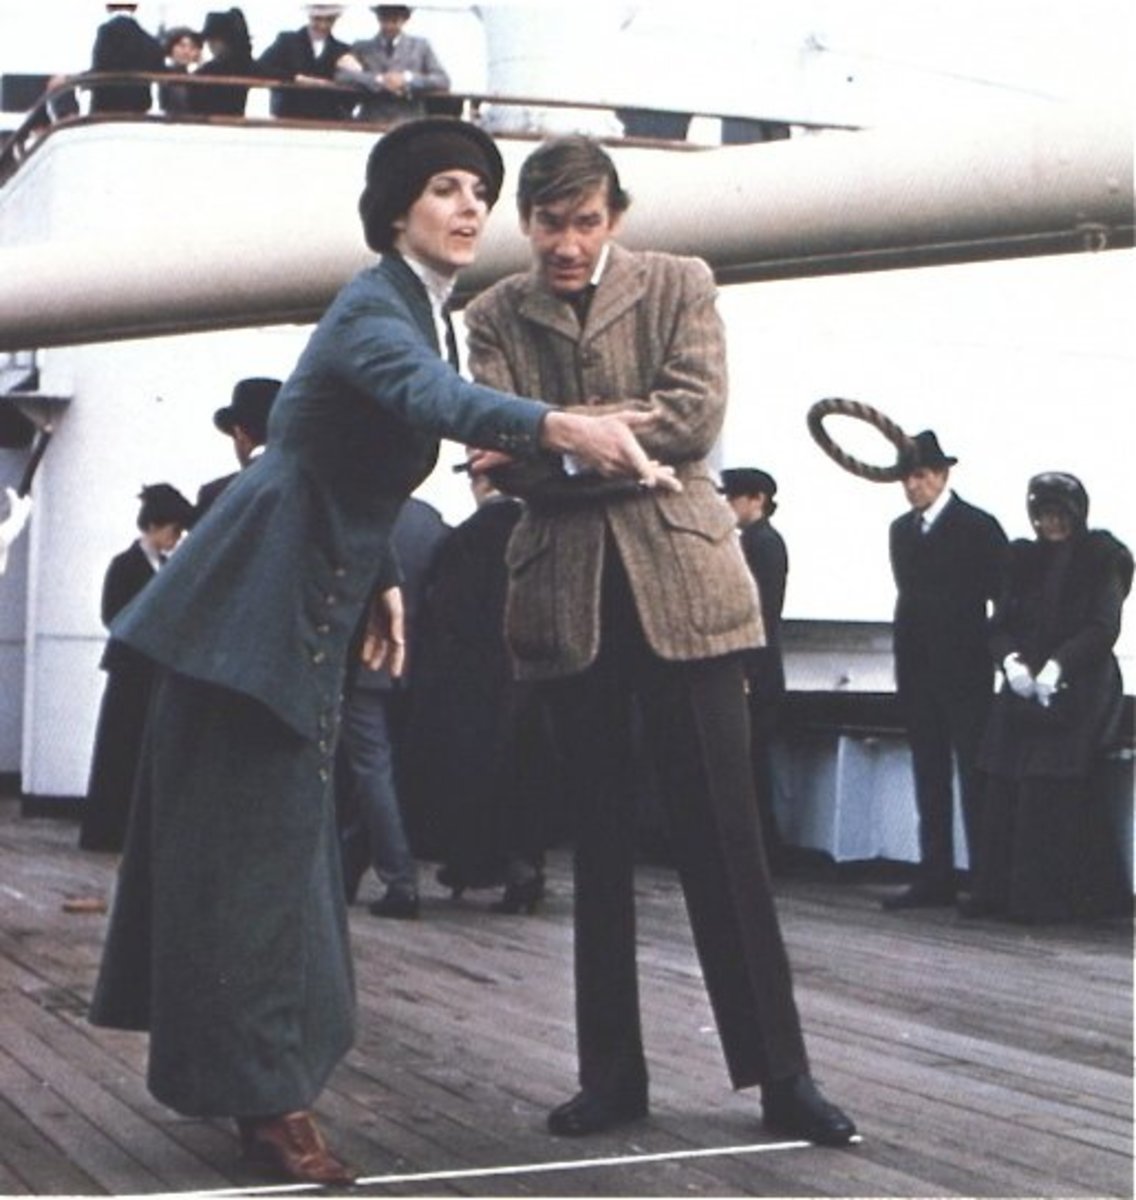 Second class passengers Leigh Goodwin (Susan Saint James) and Laurence Beesley (David Warner) enjoying themselves on deck